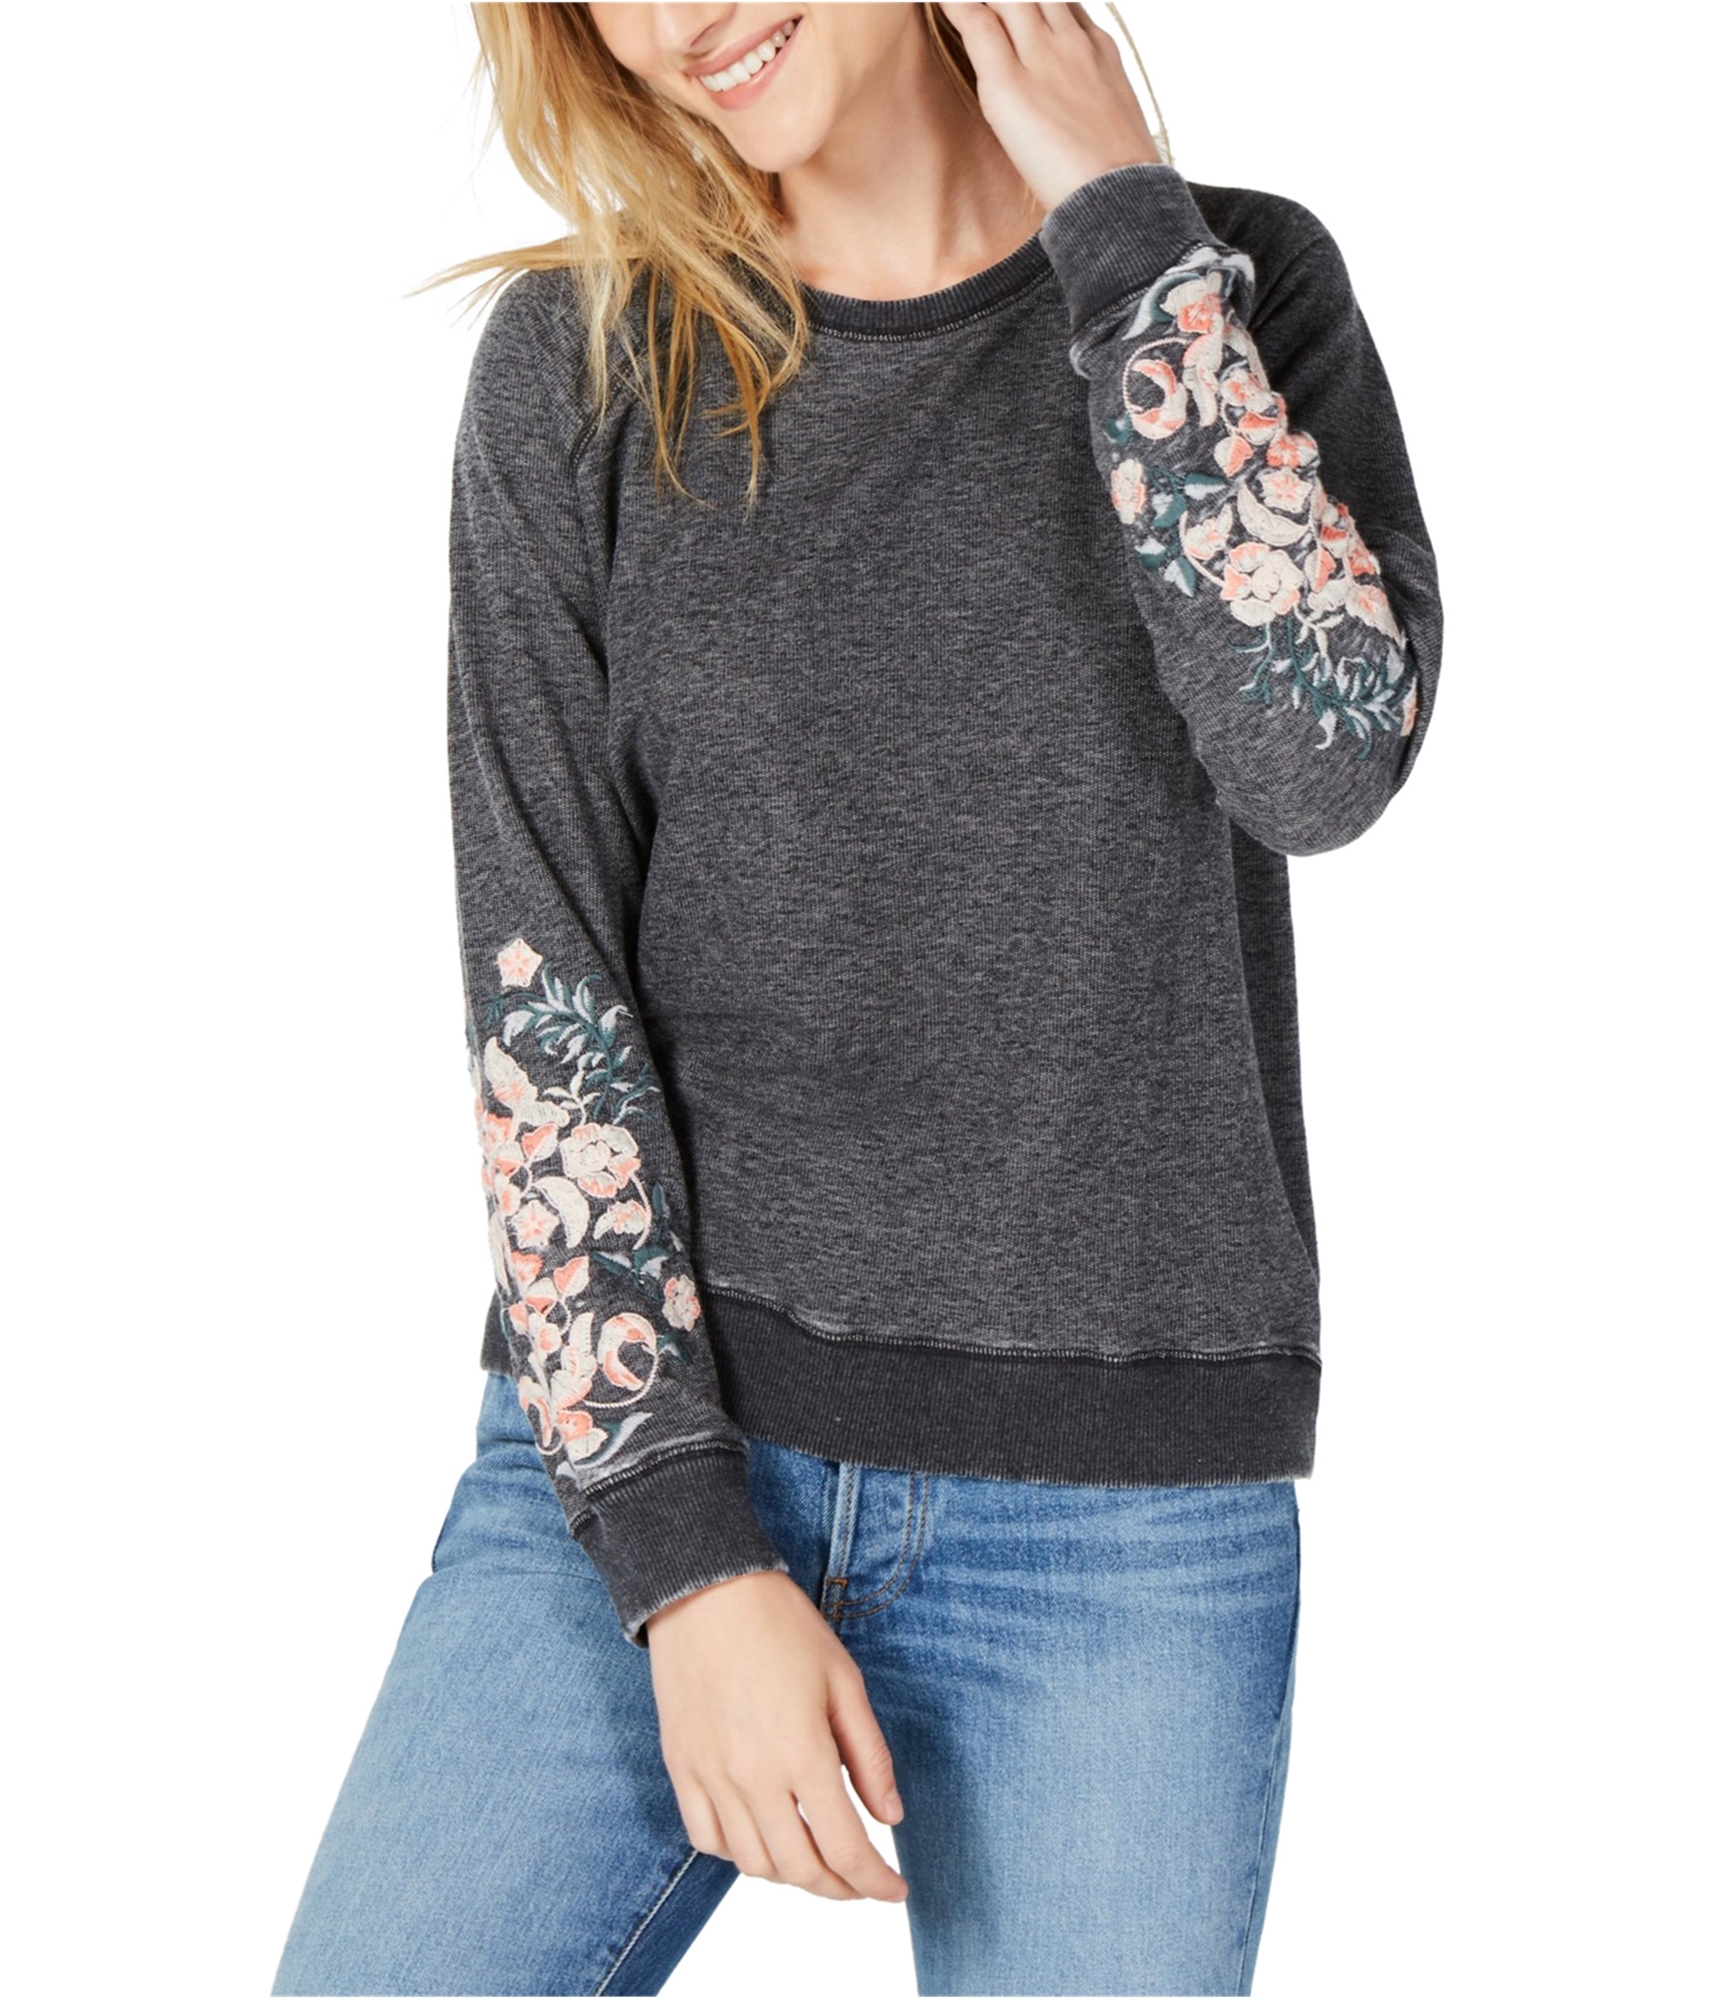 Lucky Brand Womens Embroidered Sweatshirt, Grey, Small | eBay